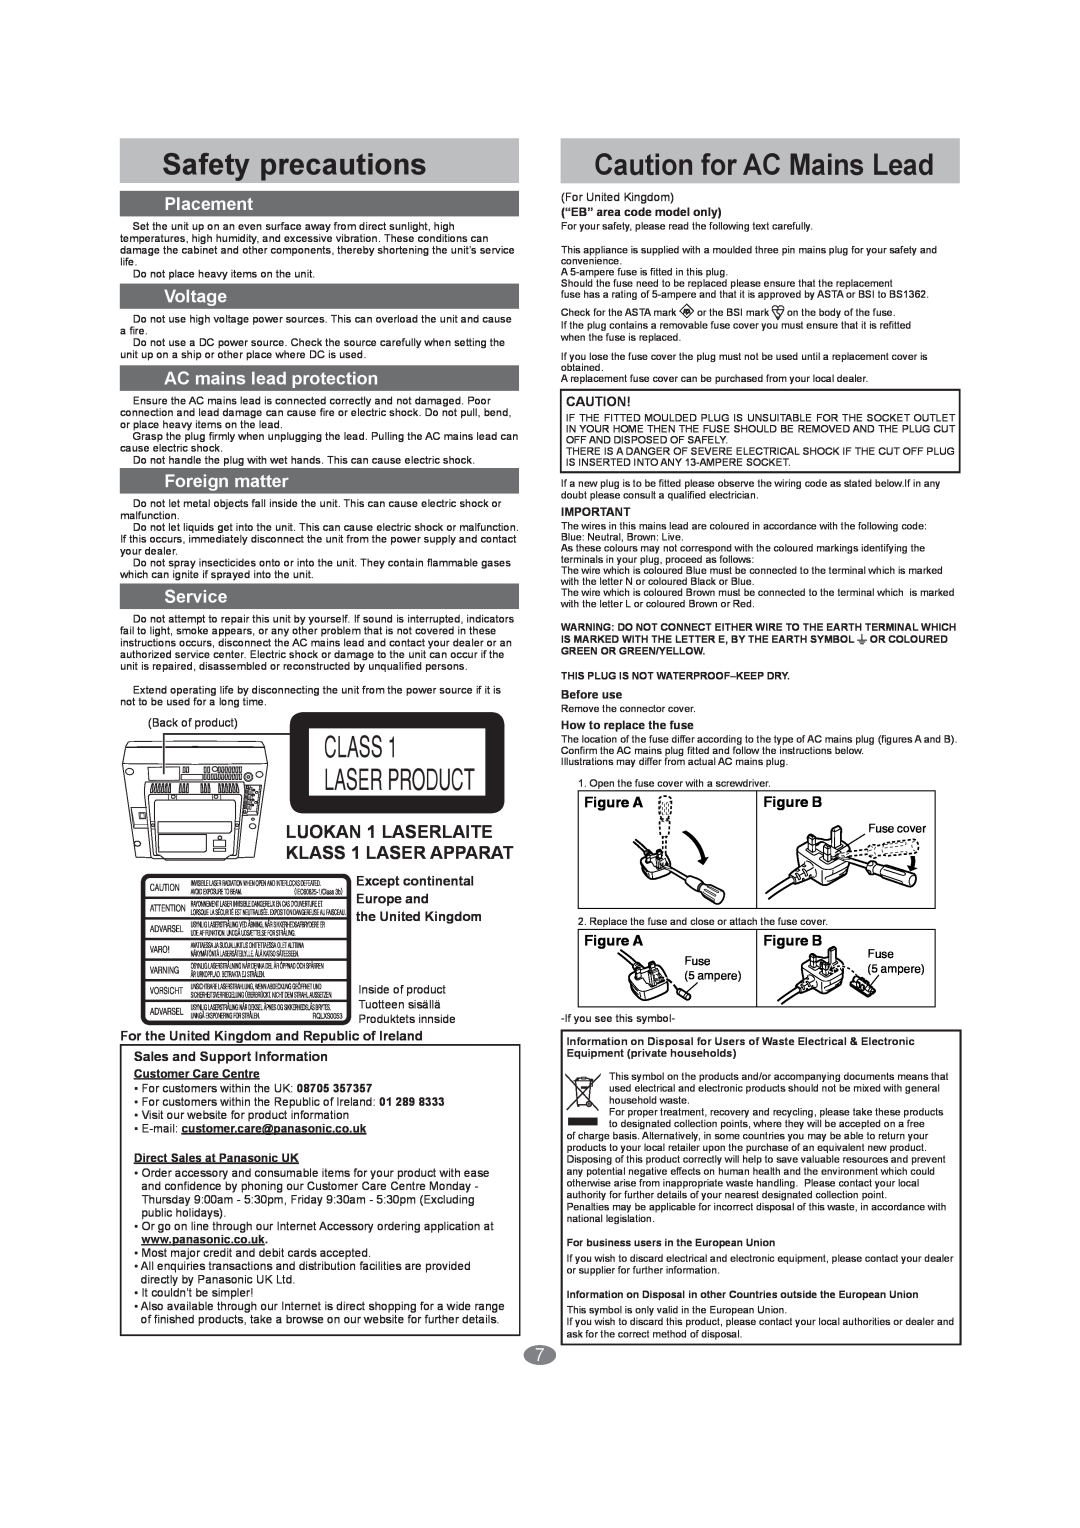 Panasonic SC-EN27 Safety precautions, Placement, Voltage, AC mains lead protection, Foreign matter, Service, Figure A 